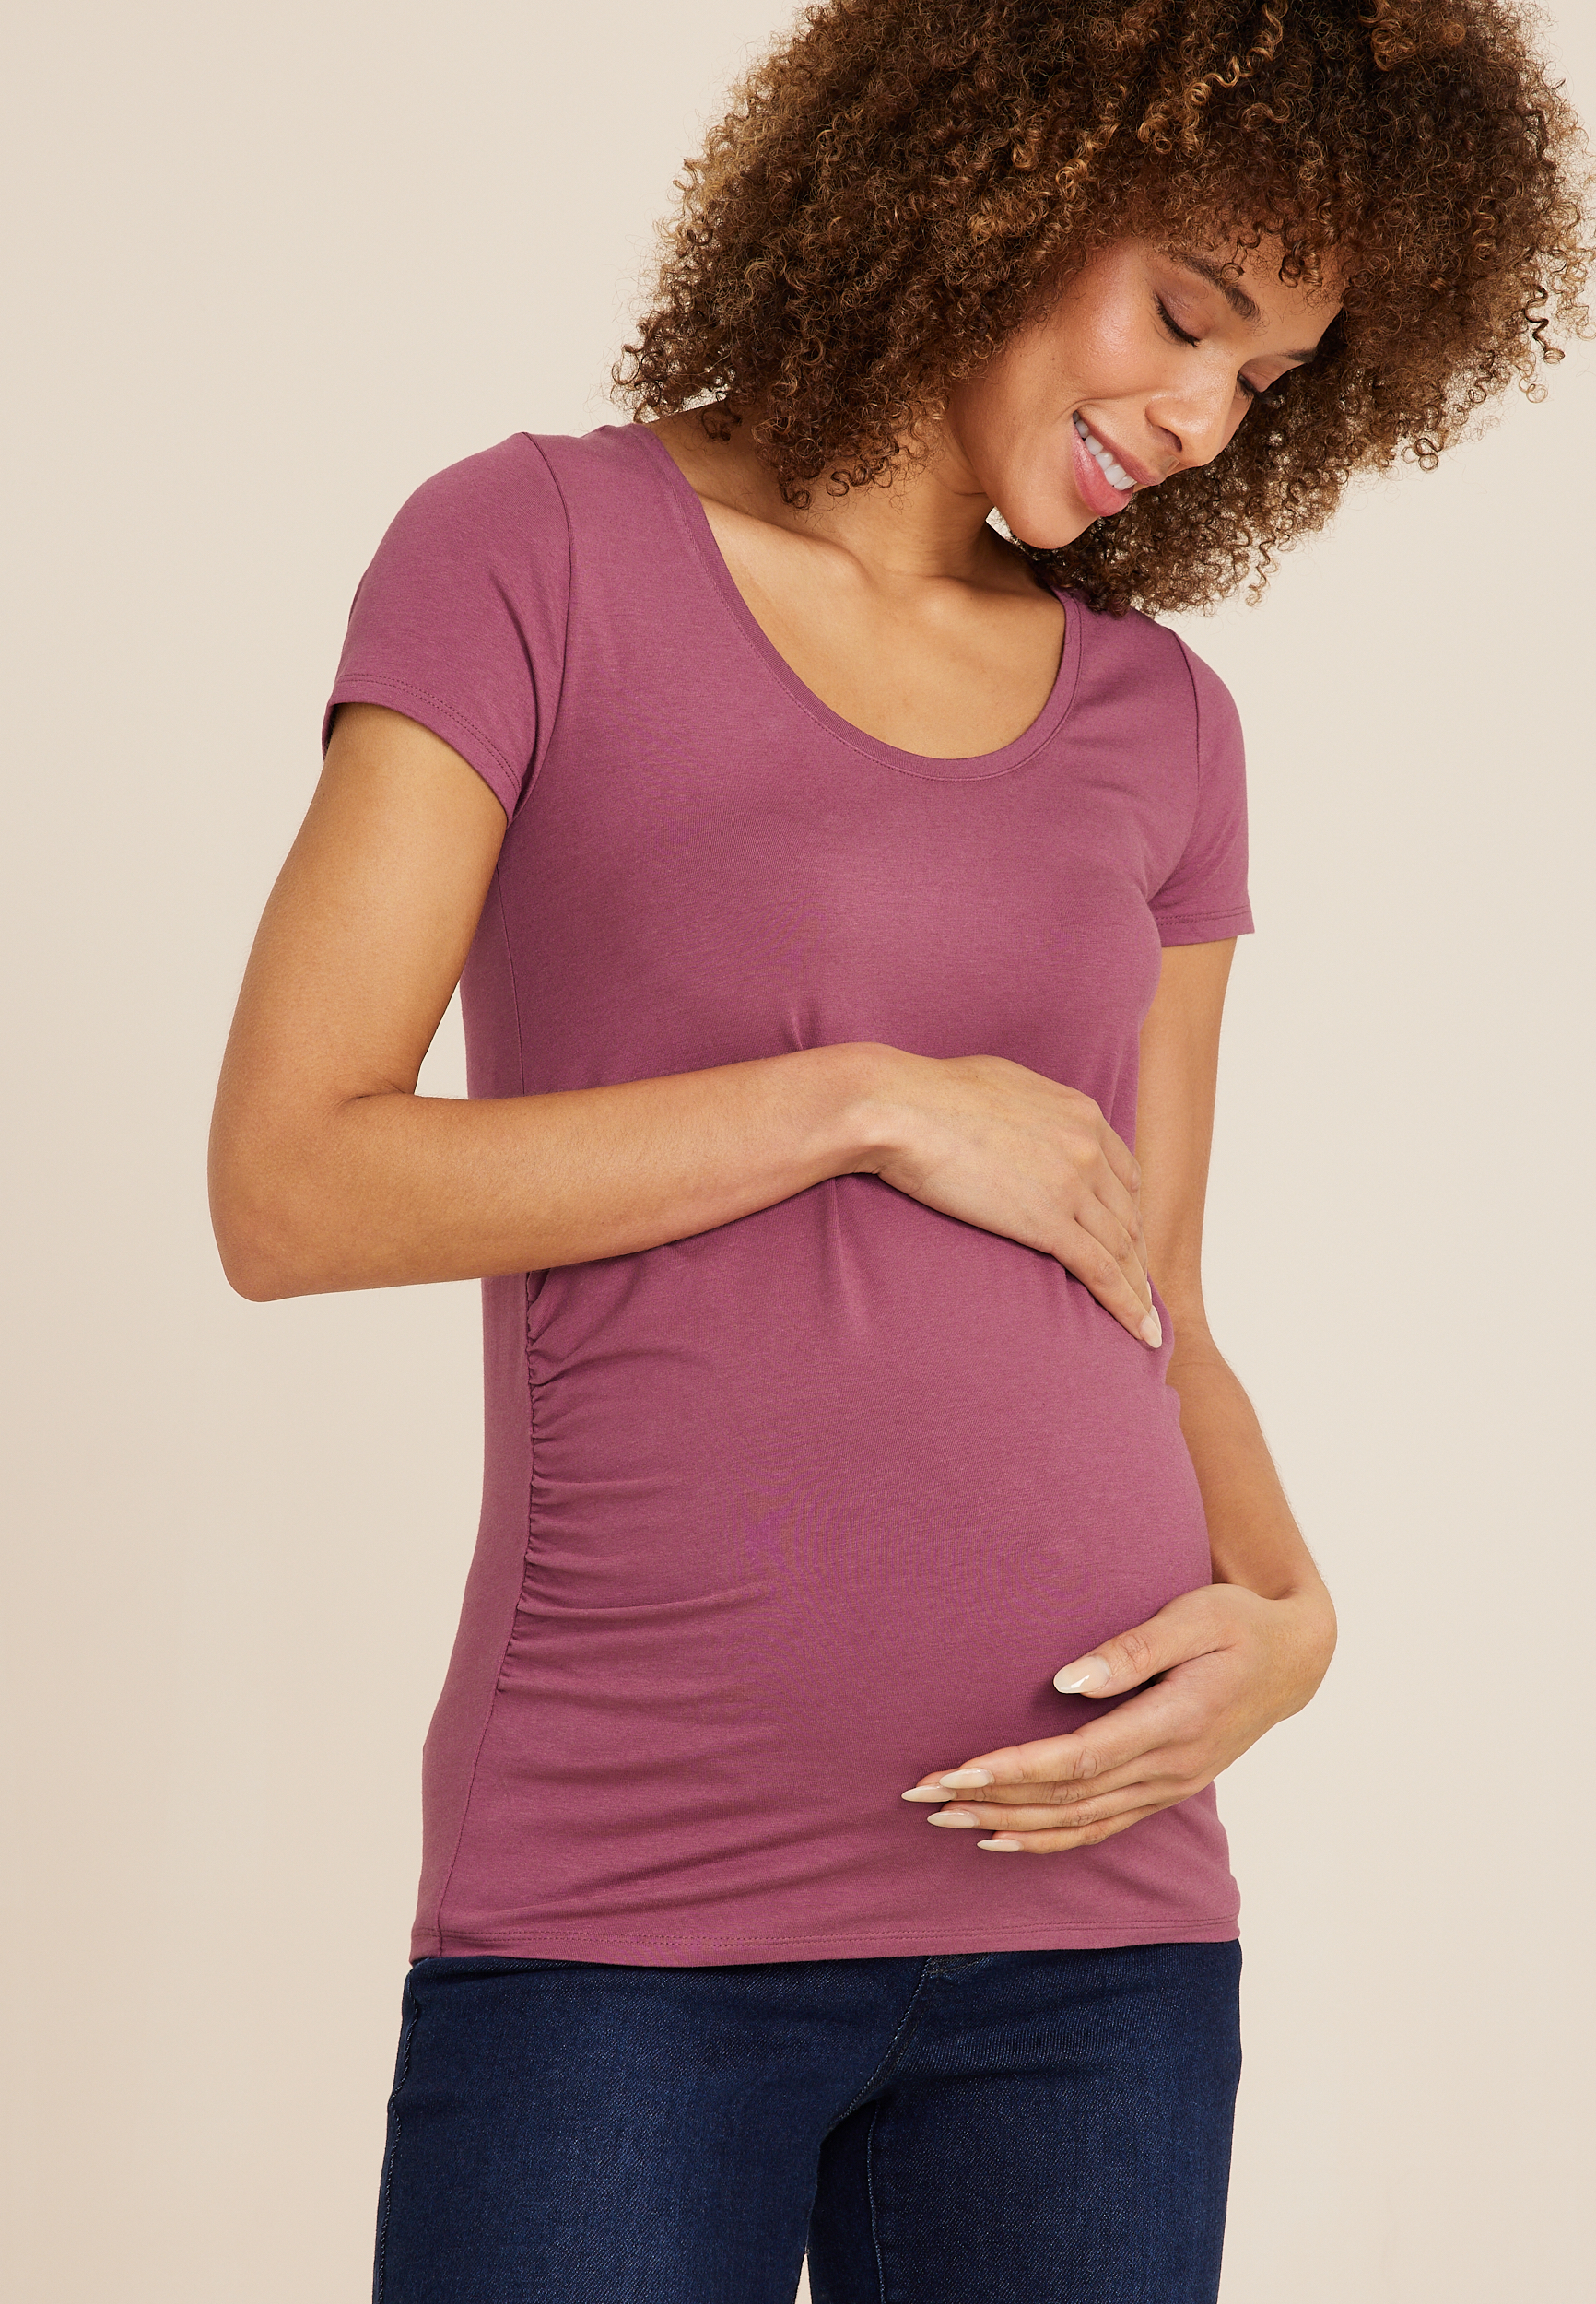 Lolmot Women Maternity Clothes Long Sleeve Top Round Neck Leisure  Breastfeeding Nursing Pregnant Tops 